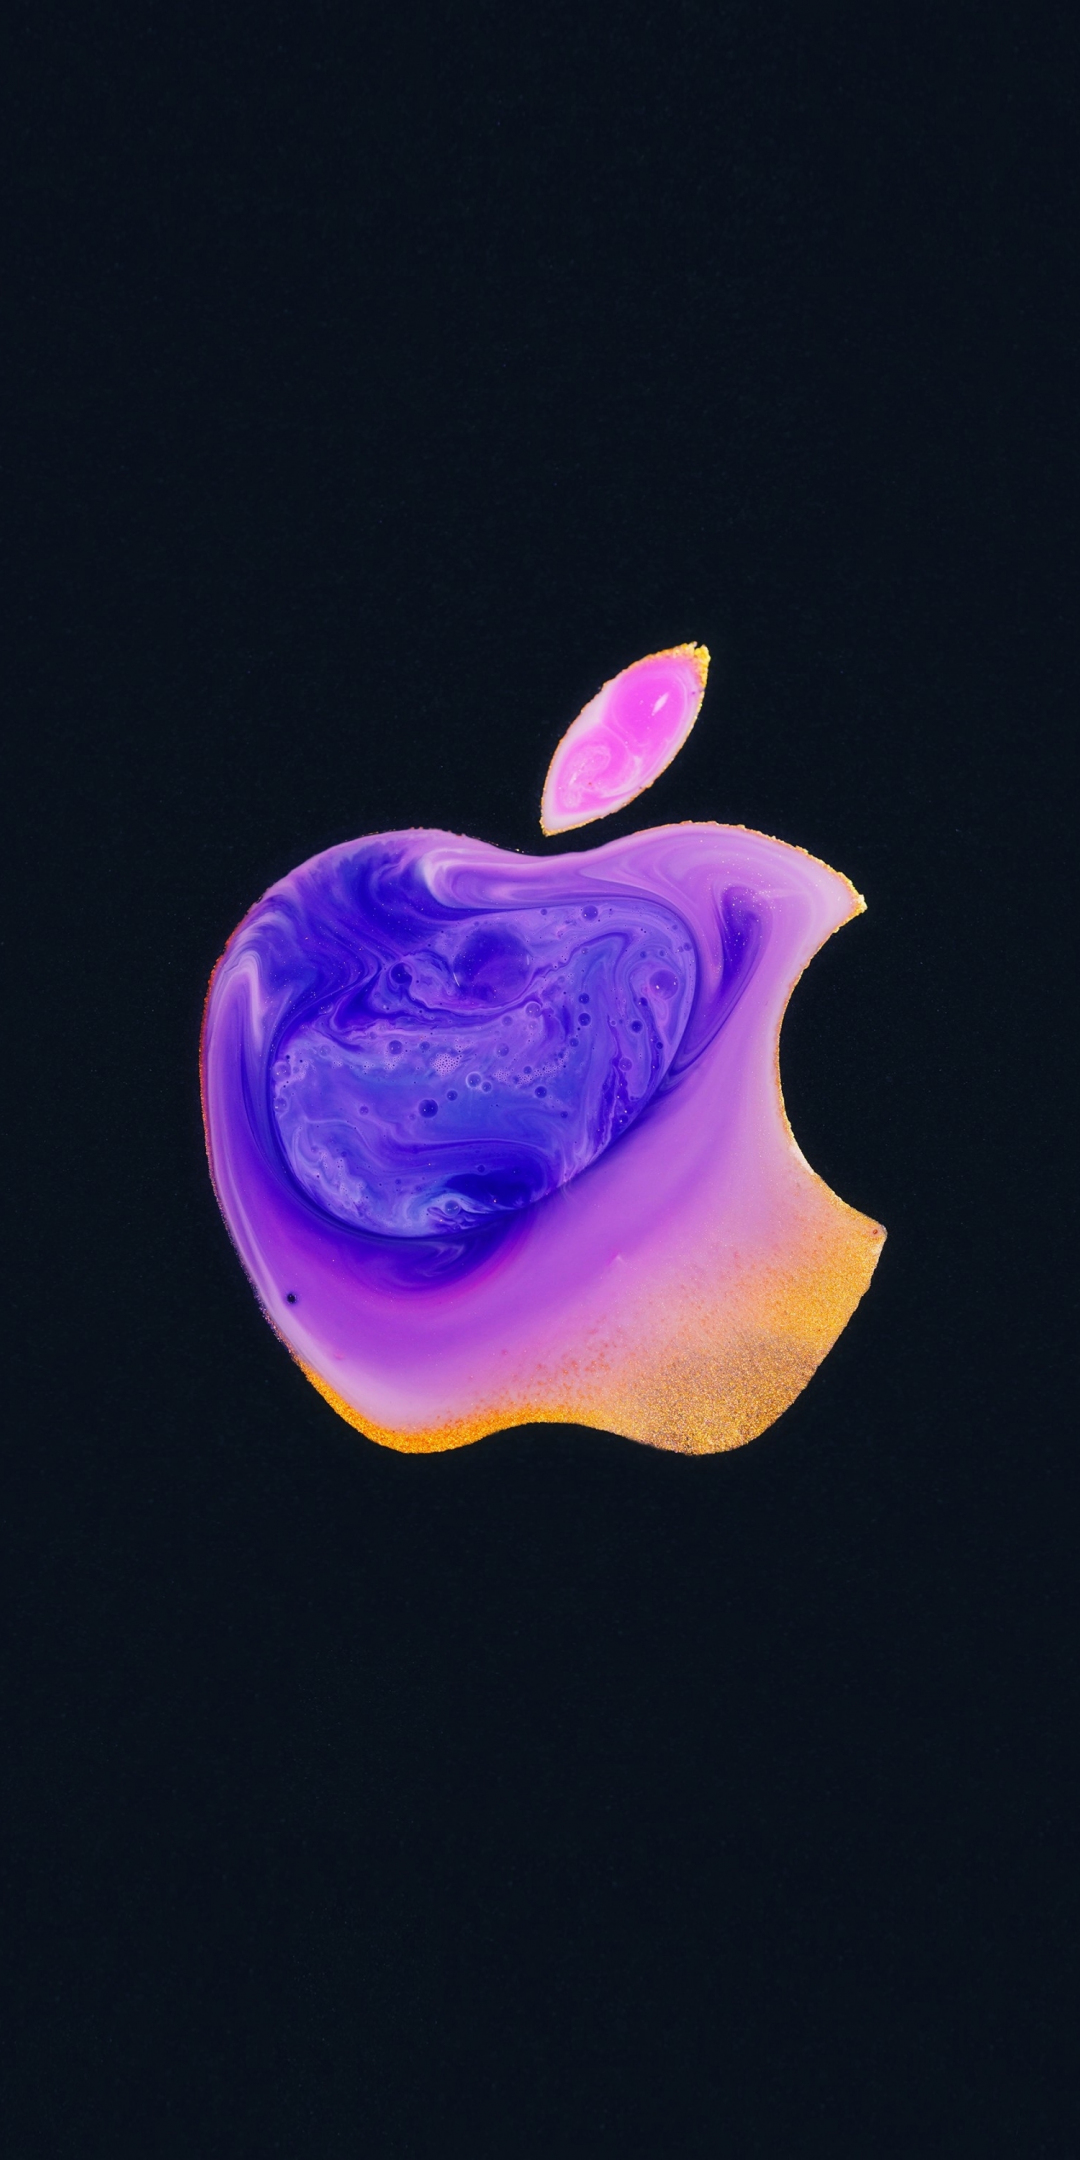 Apple iPhone's logo, dark, 1080x2160 wallpaper